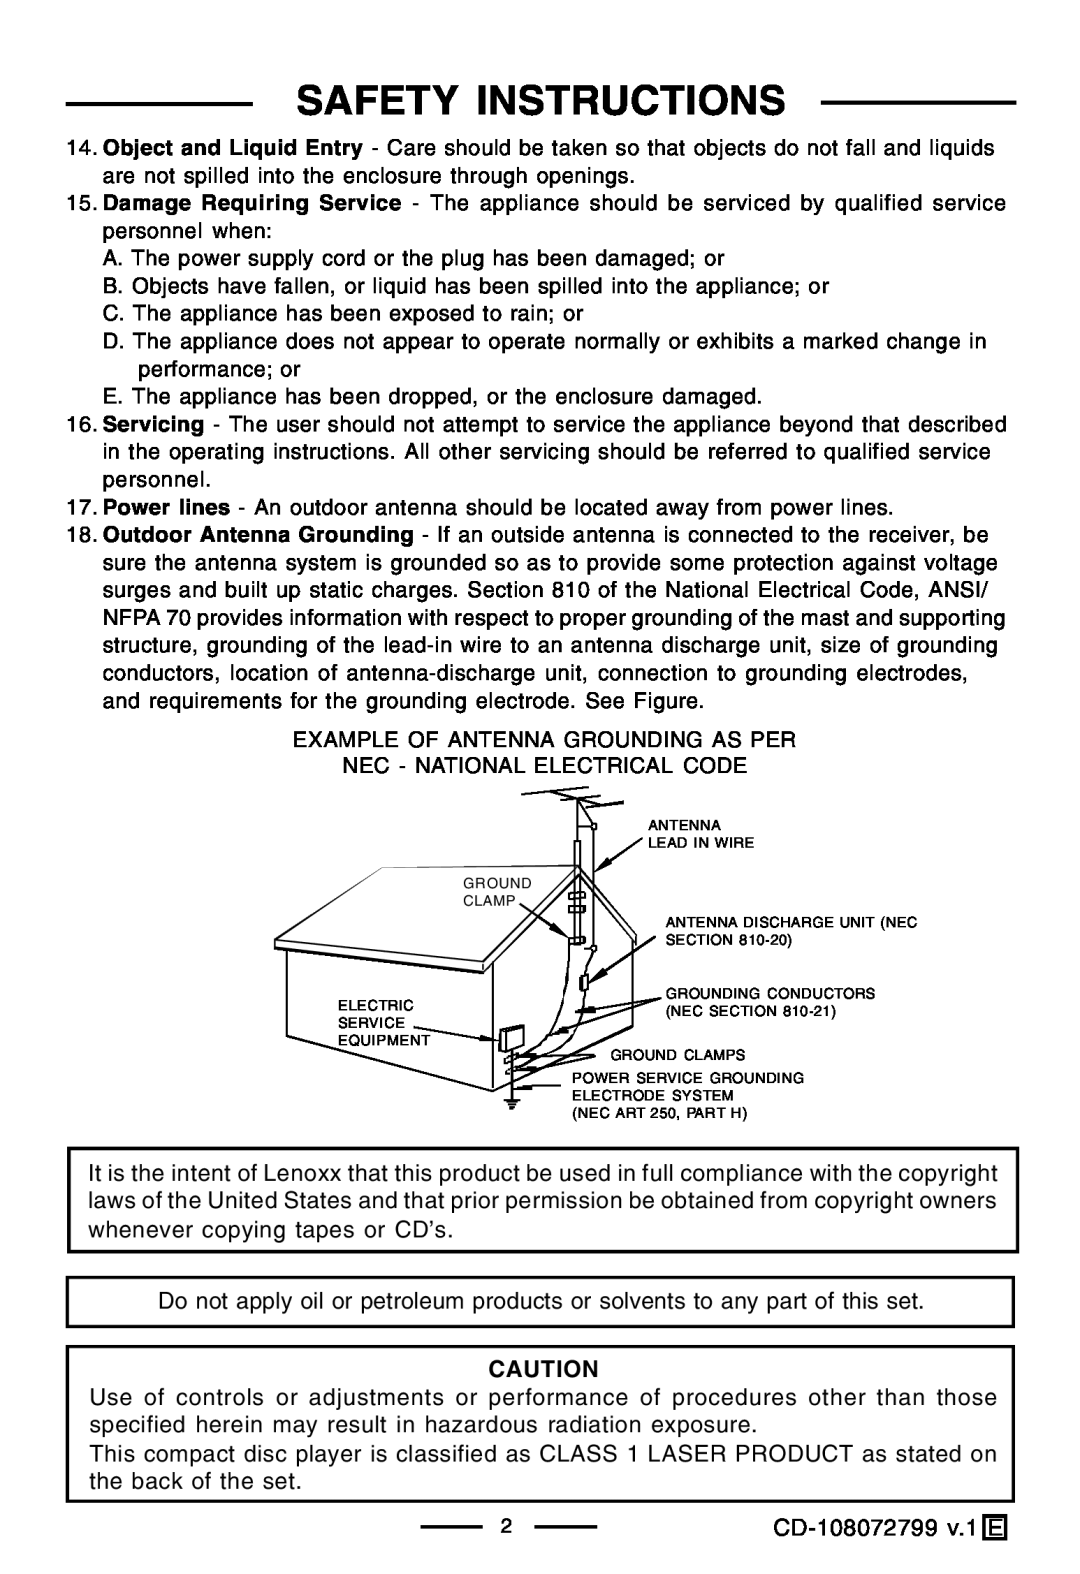 Lenoxx Electronics operating instructions Safety Instructions, CD-108072799v.1 E 